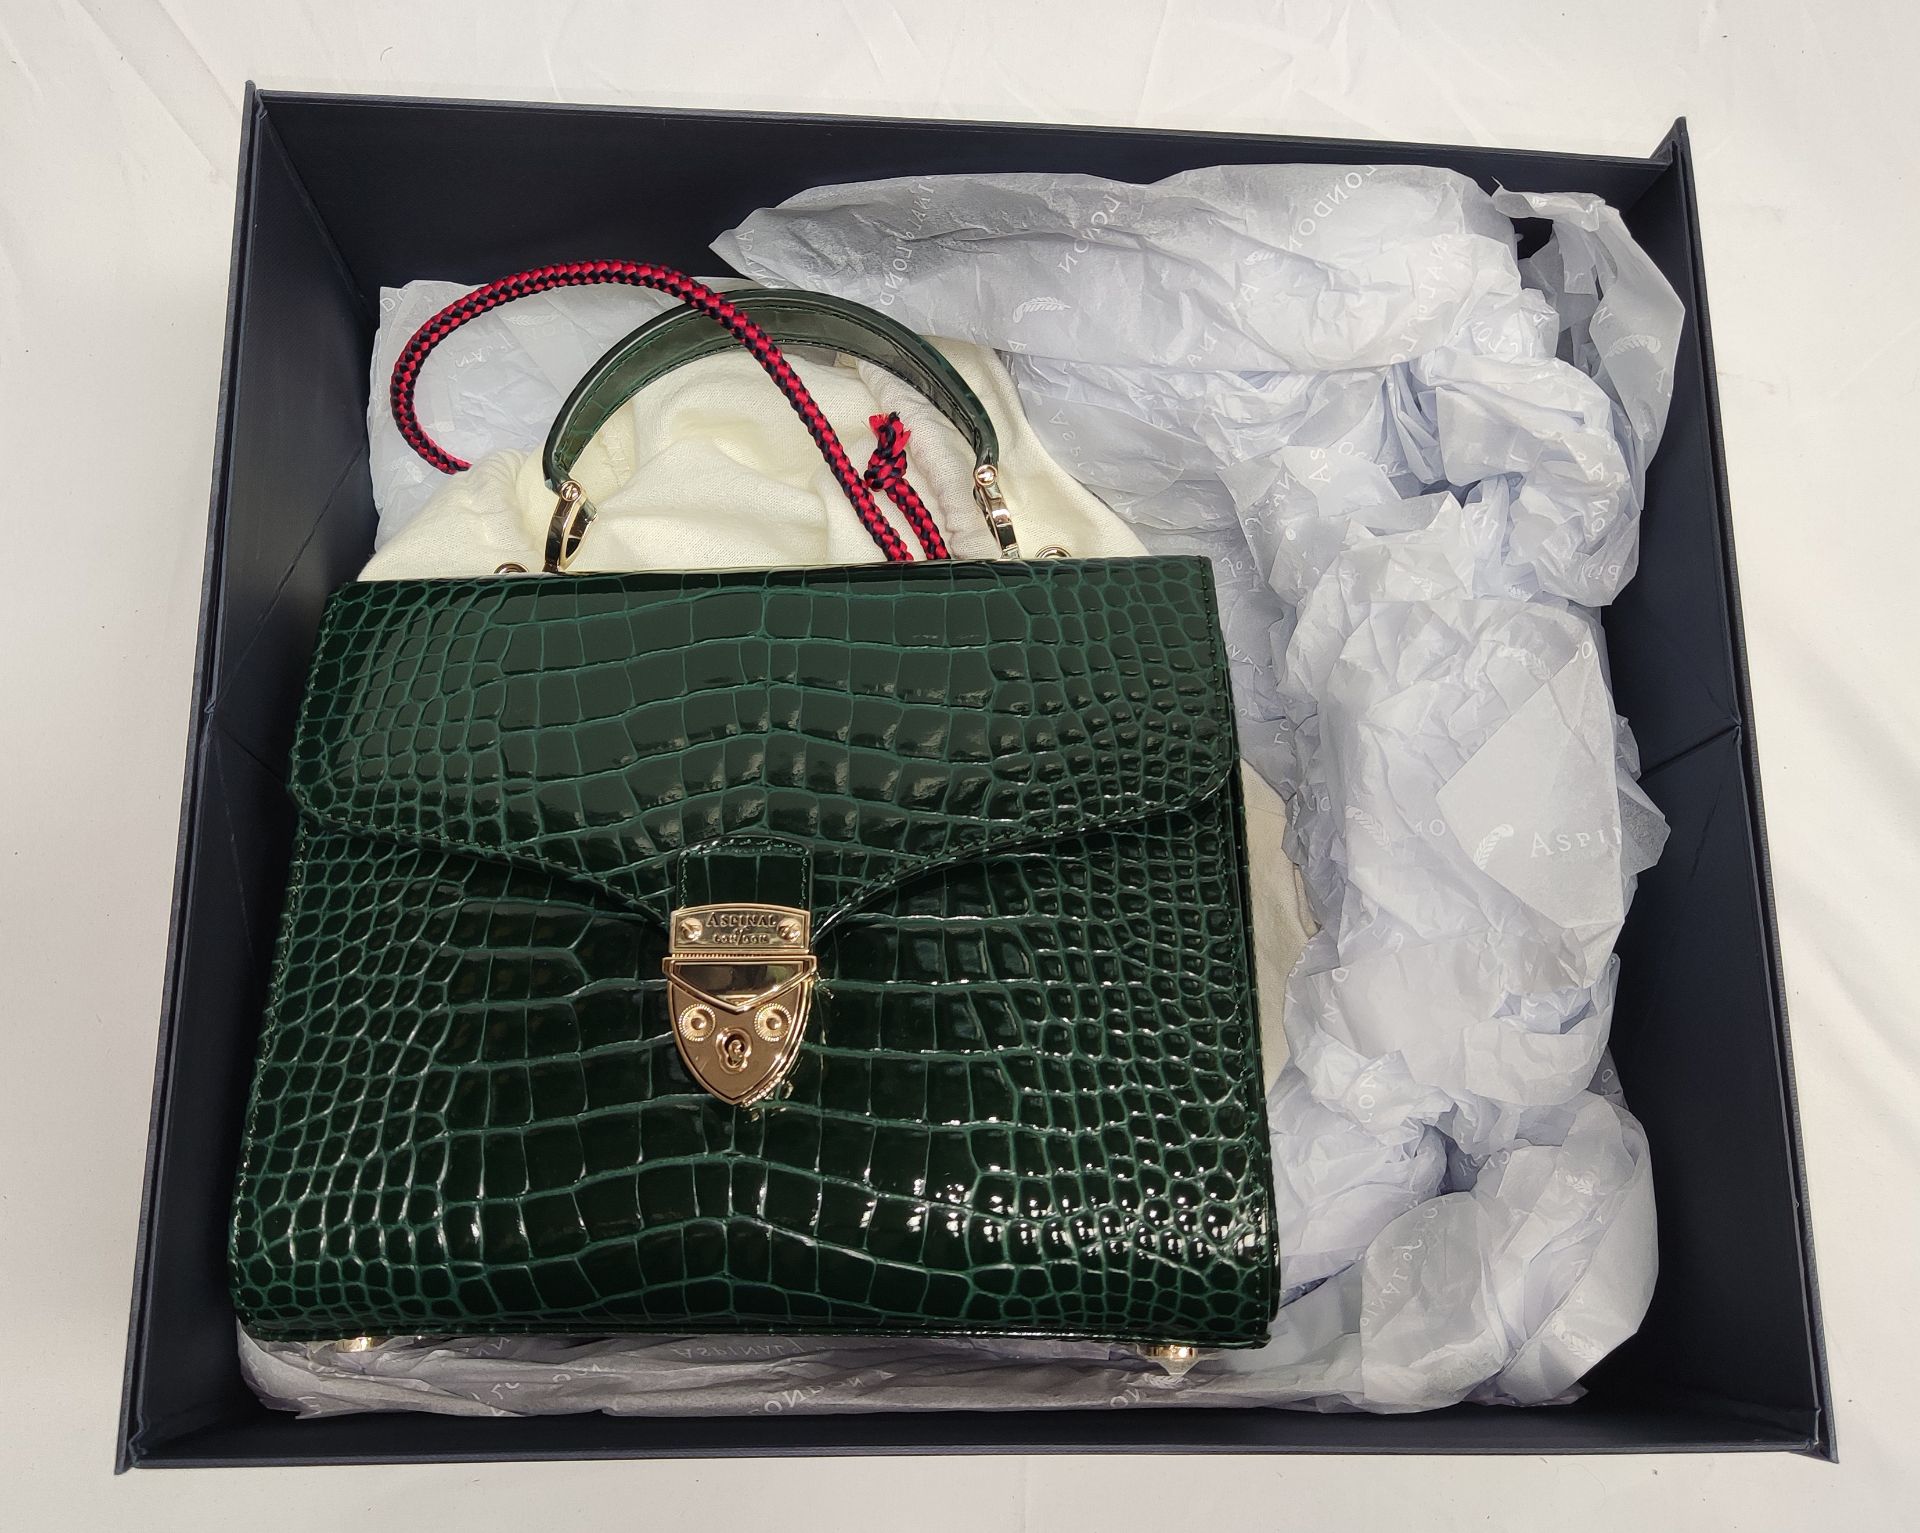 1 x ASPINAL OF LONDON Mayfair Bag - Evergreen Patent Croc - Original RRP £695.00 - Image 3 of 23